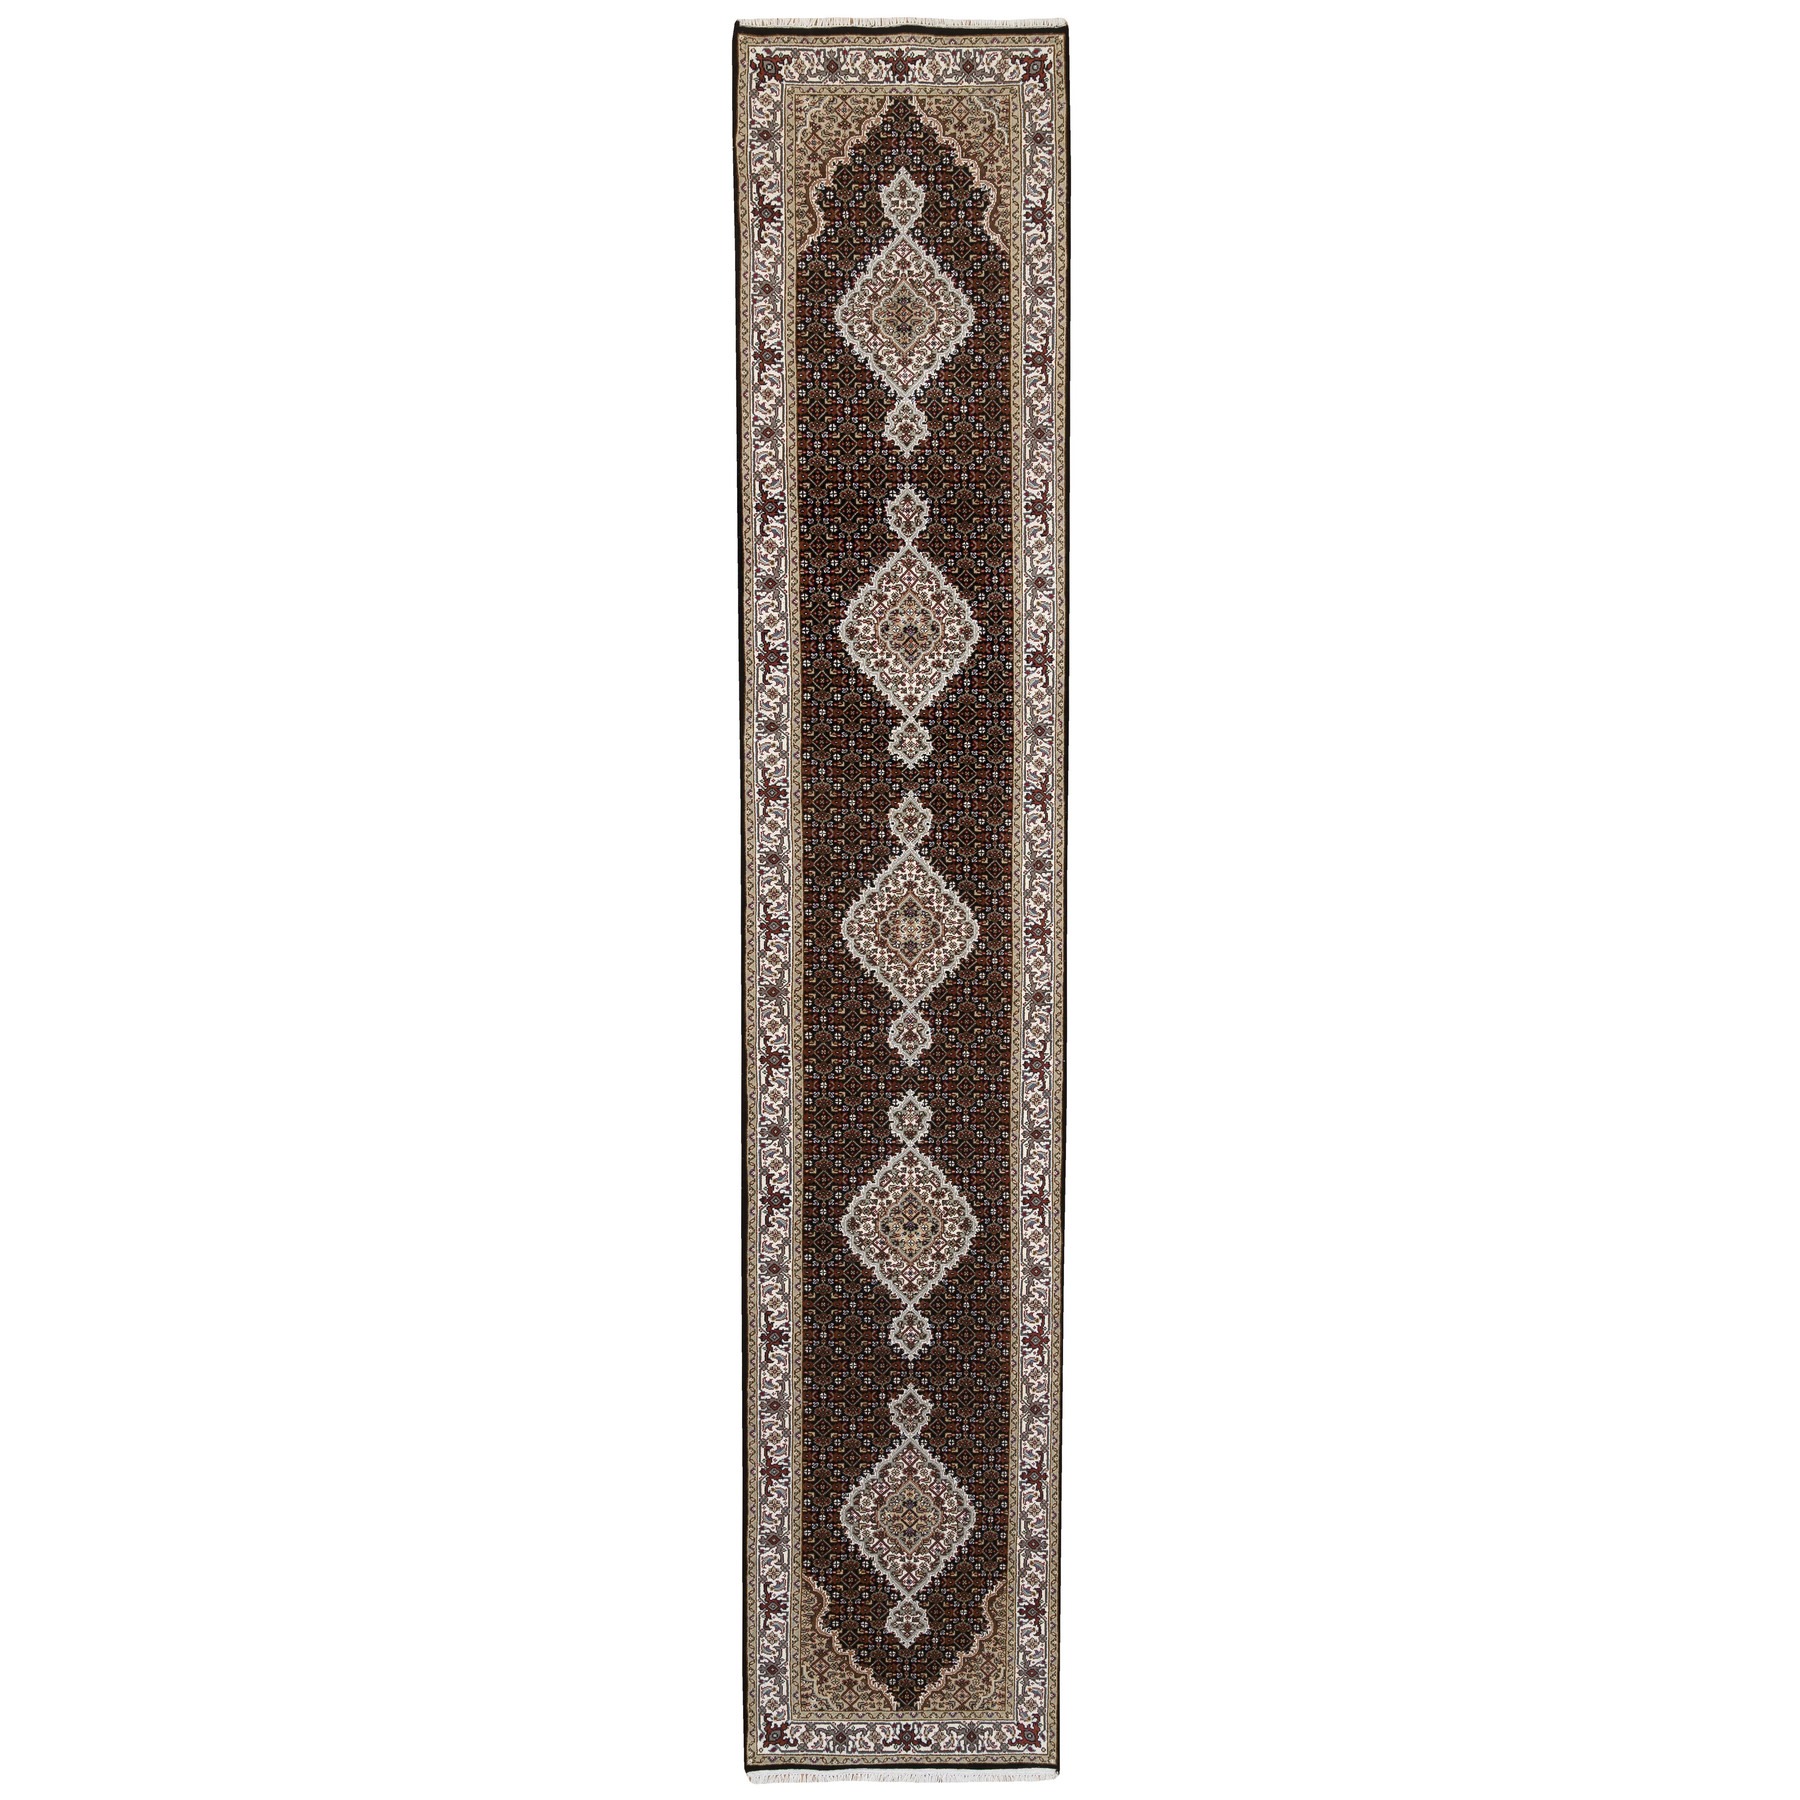 2'7"x14'2" Rich Black Tabriz Mahi with Fish Medallion Design 175 KPSI Hand Woven Wool and Silk Runner Oriental Rug 